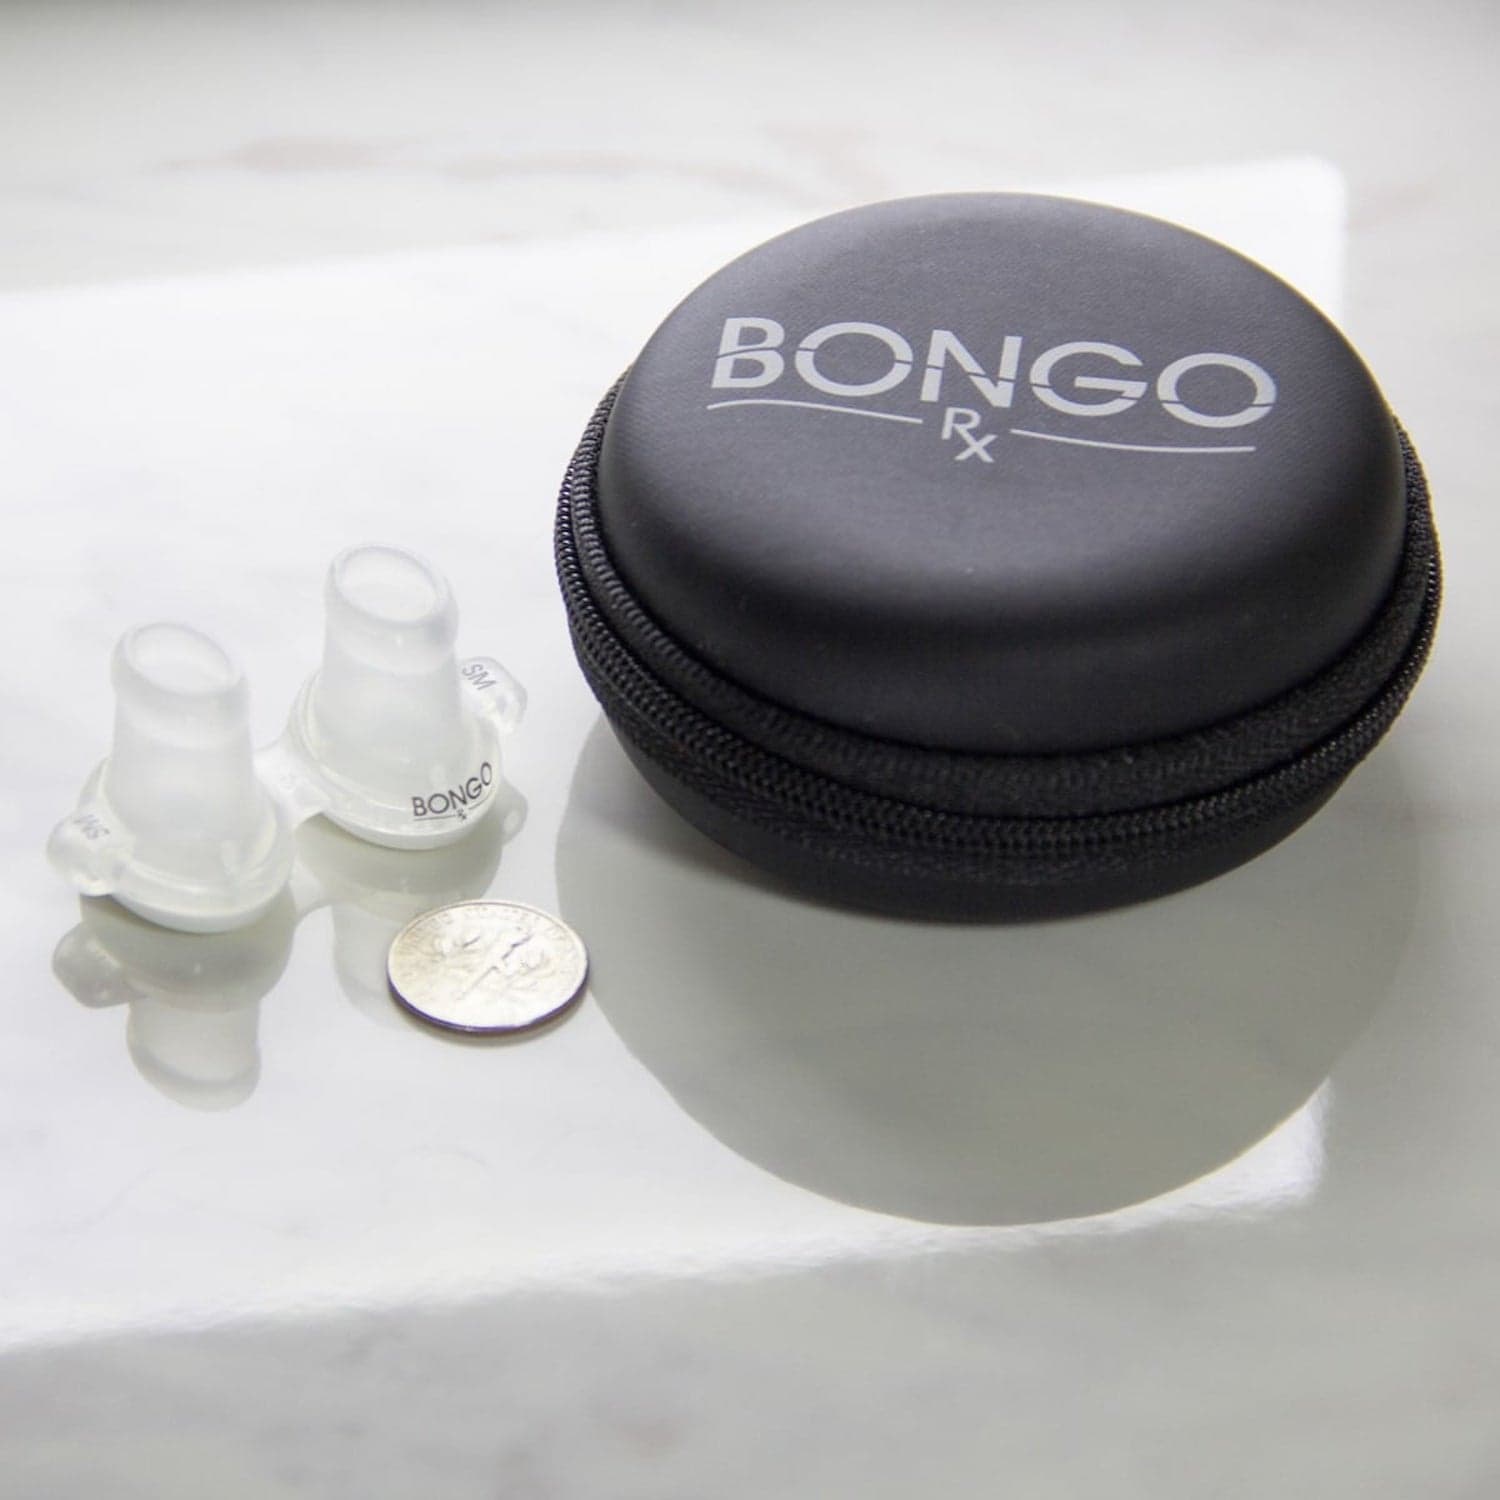 Bongo Rx - travel case - Starter Kit Bongo Rx - Sleep Therapy Device